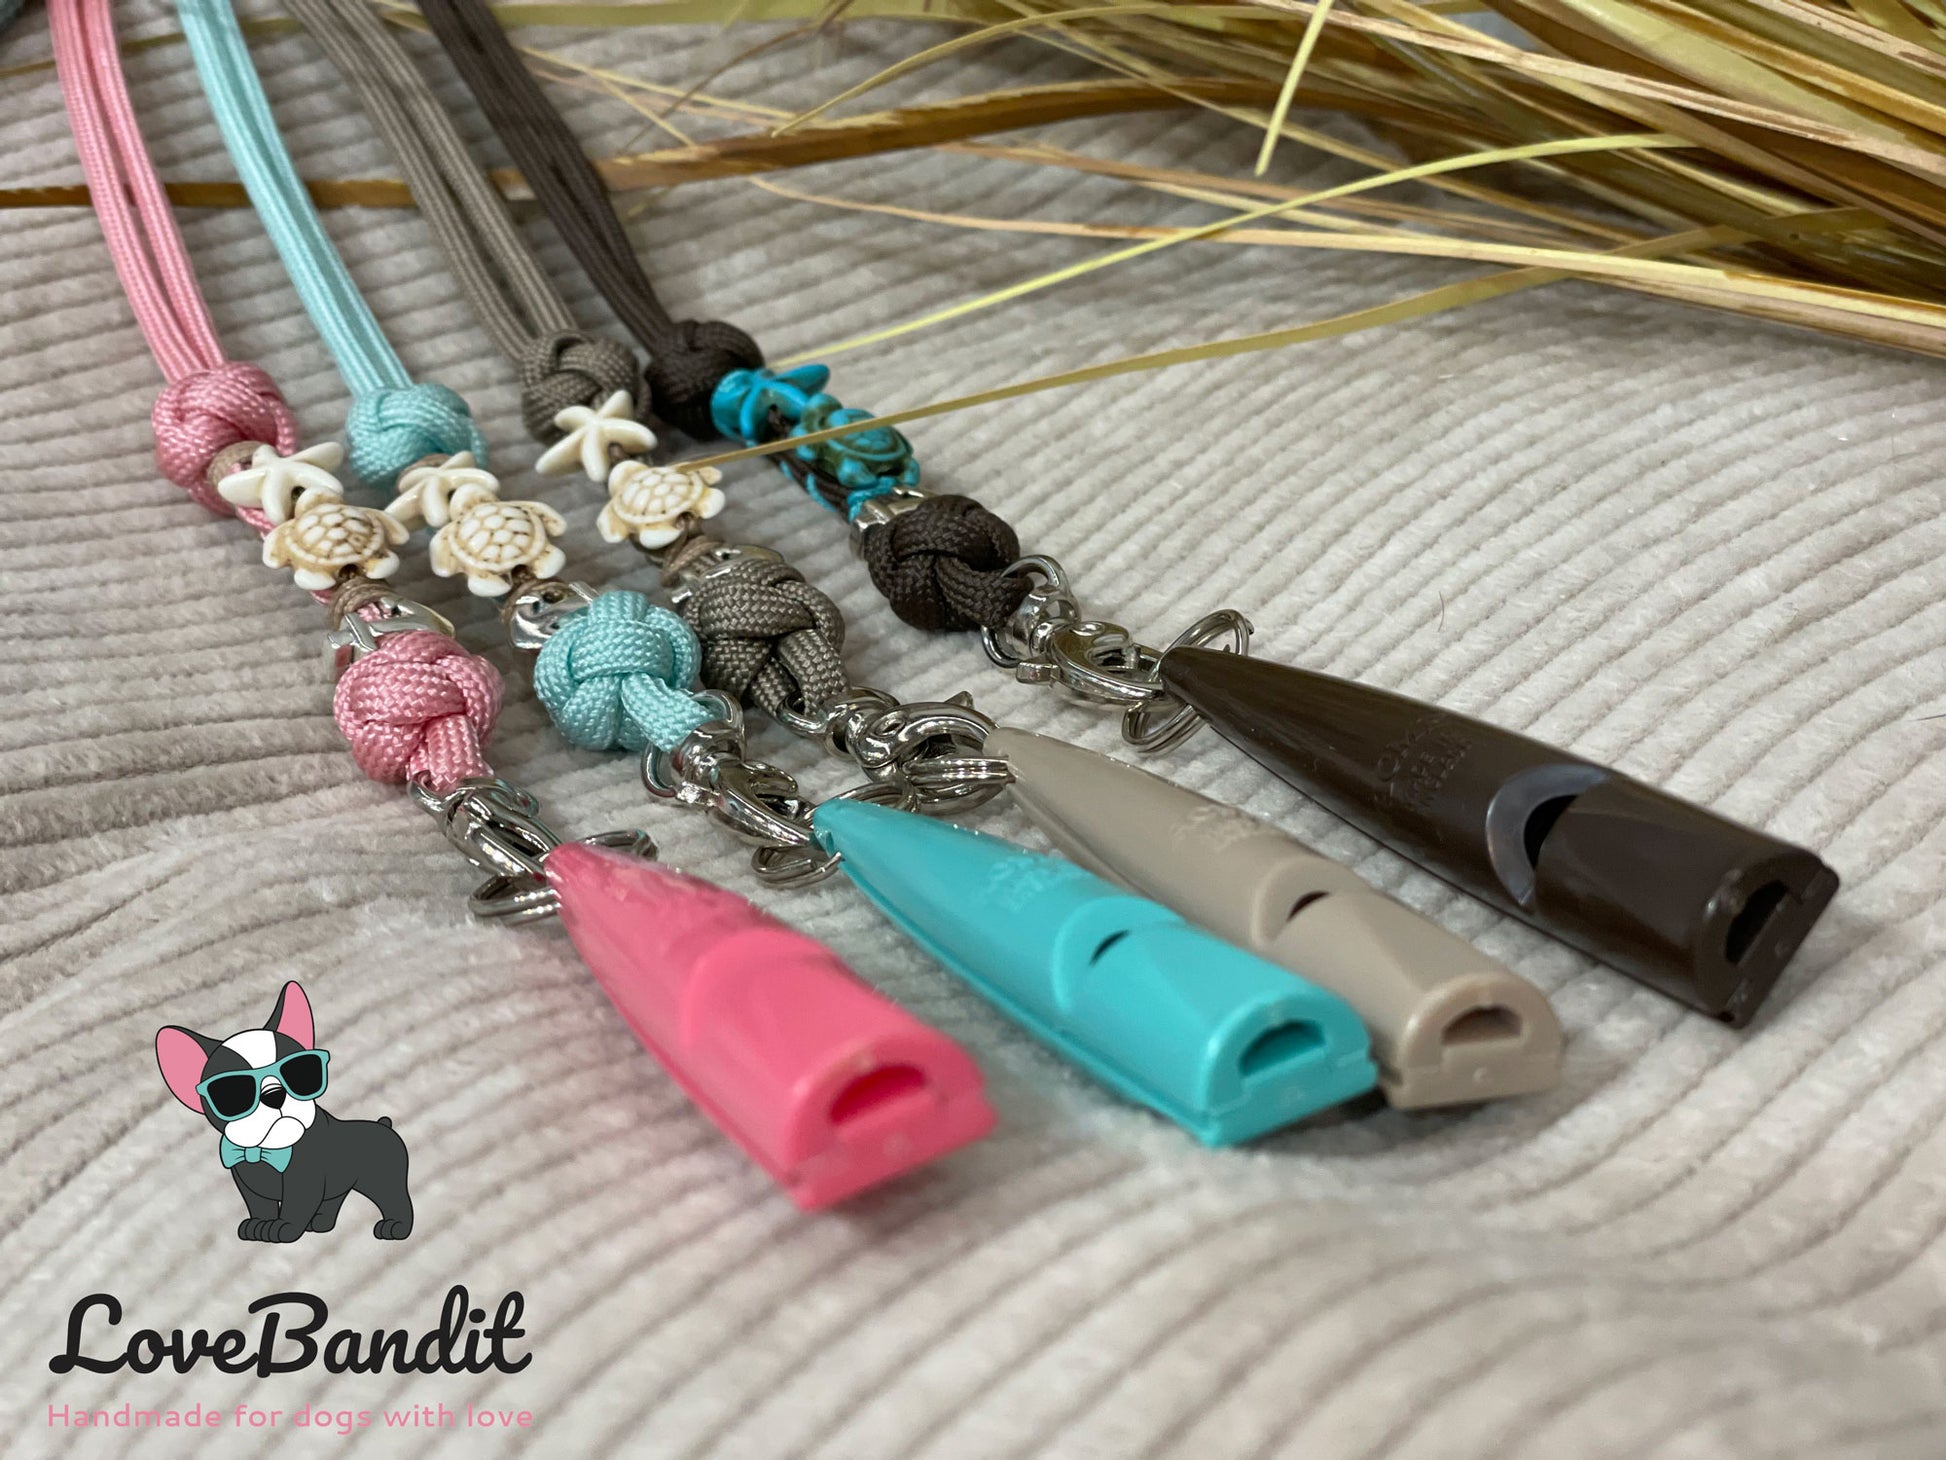 Hundepfeifenband "Meerliebe" aus Paracord - passend zu EM Keramik Halsband Lovebandit